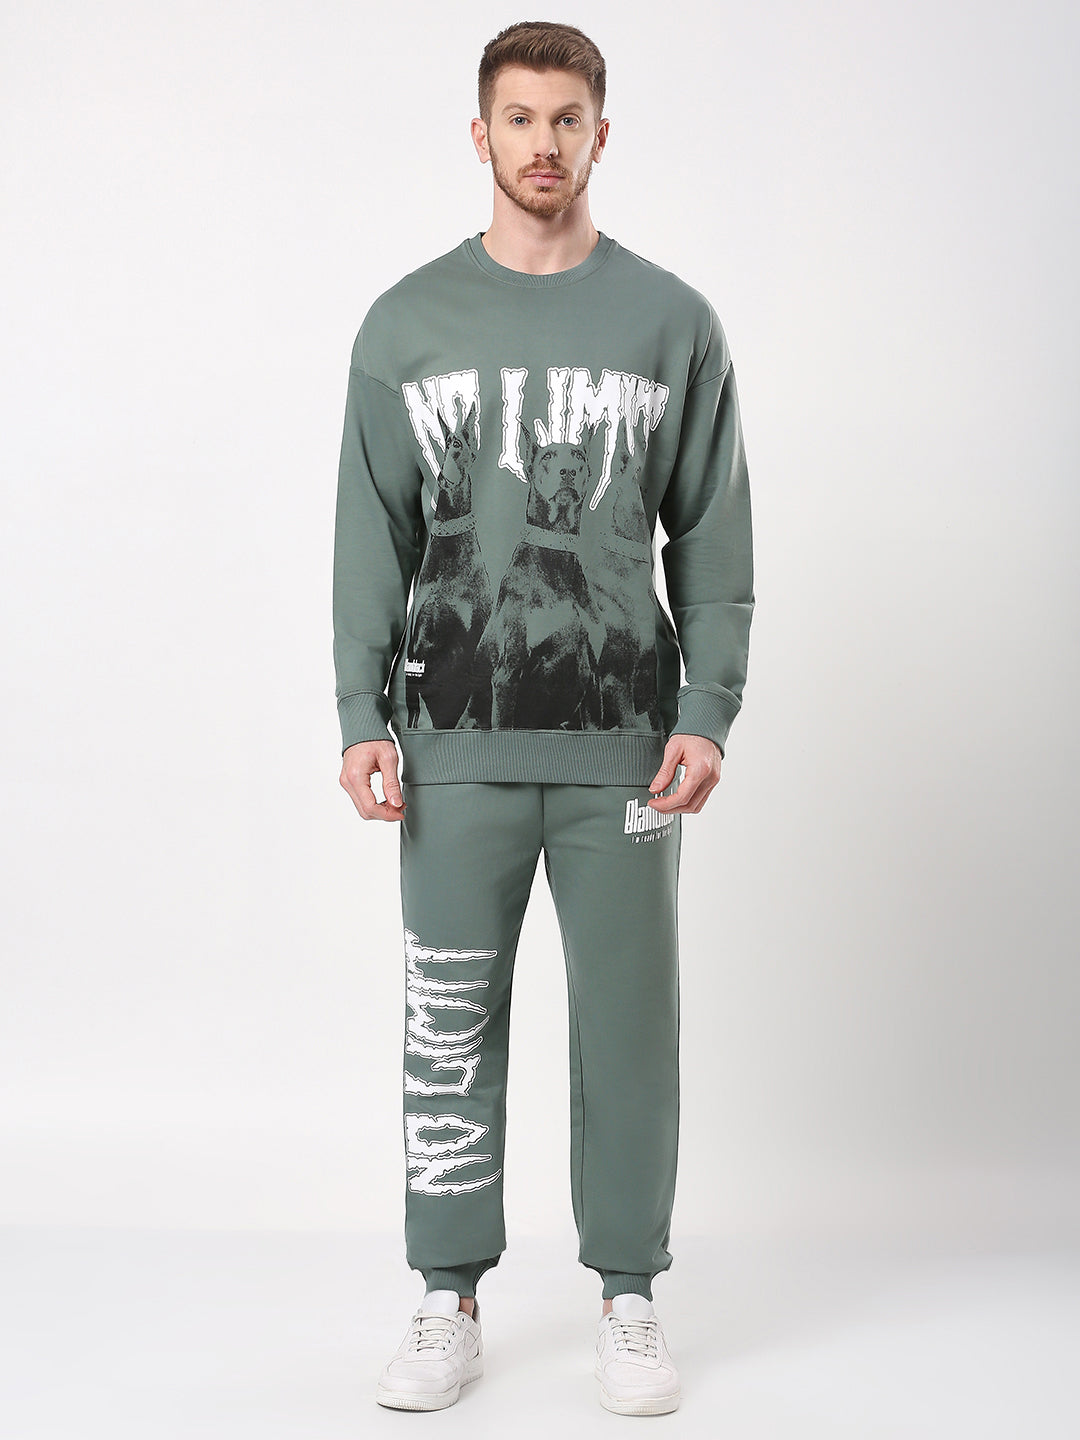 No Limit- Men's Printed Sweatshirt with Pants Co-ord-300 GSM Looper